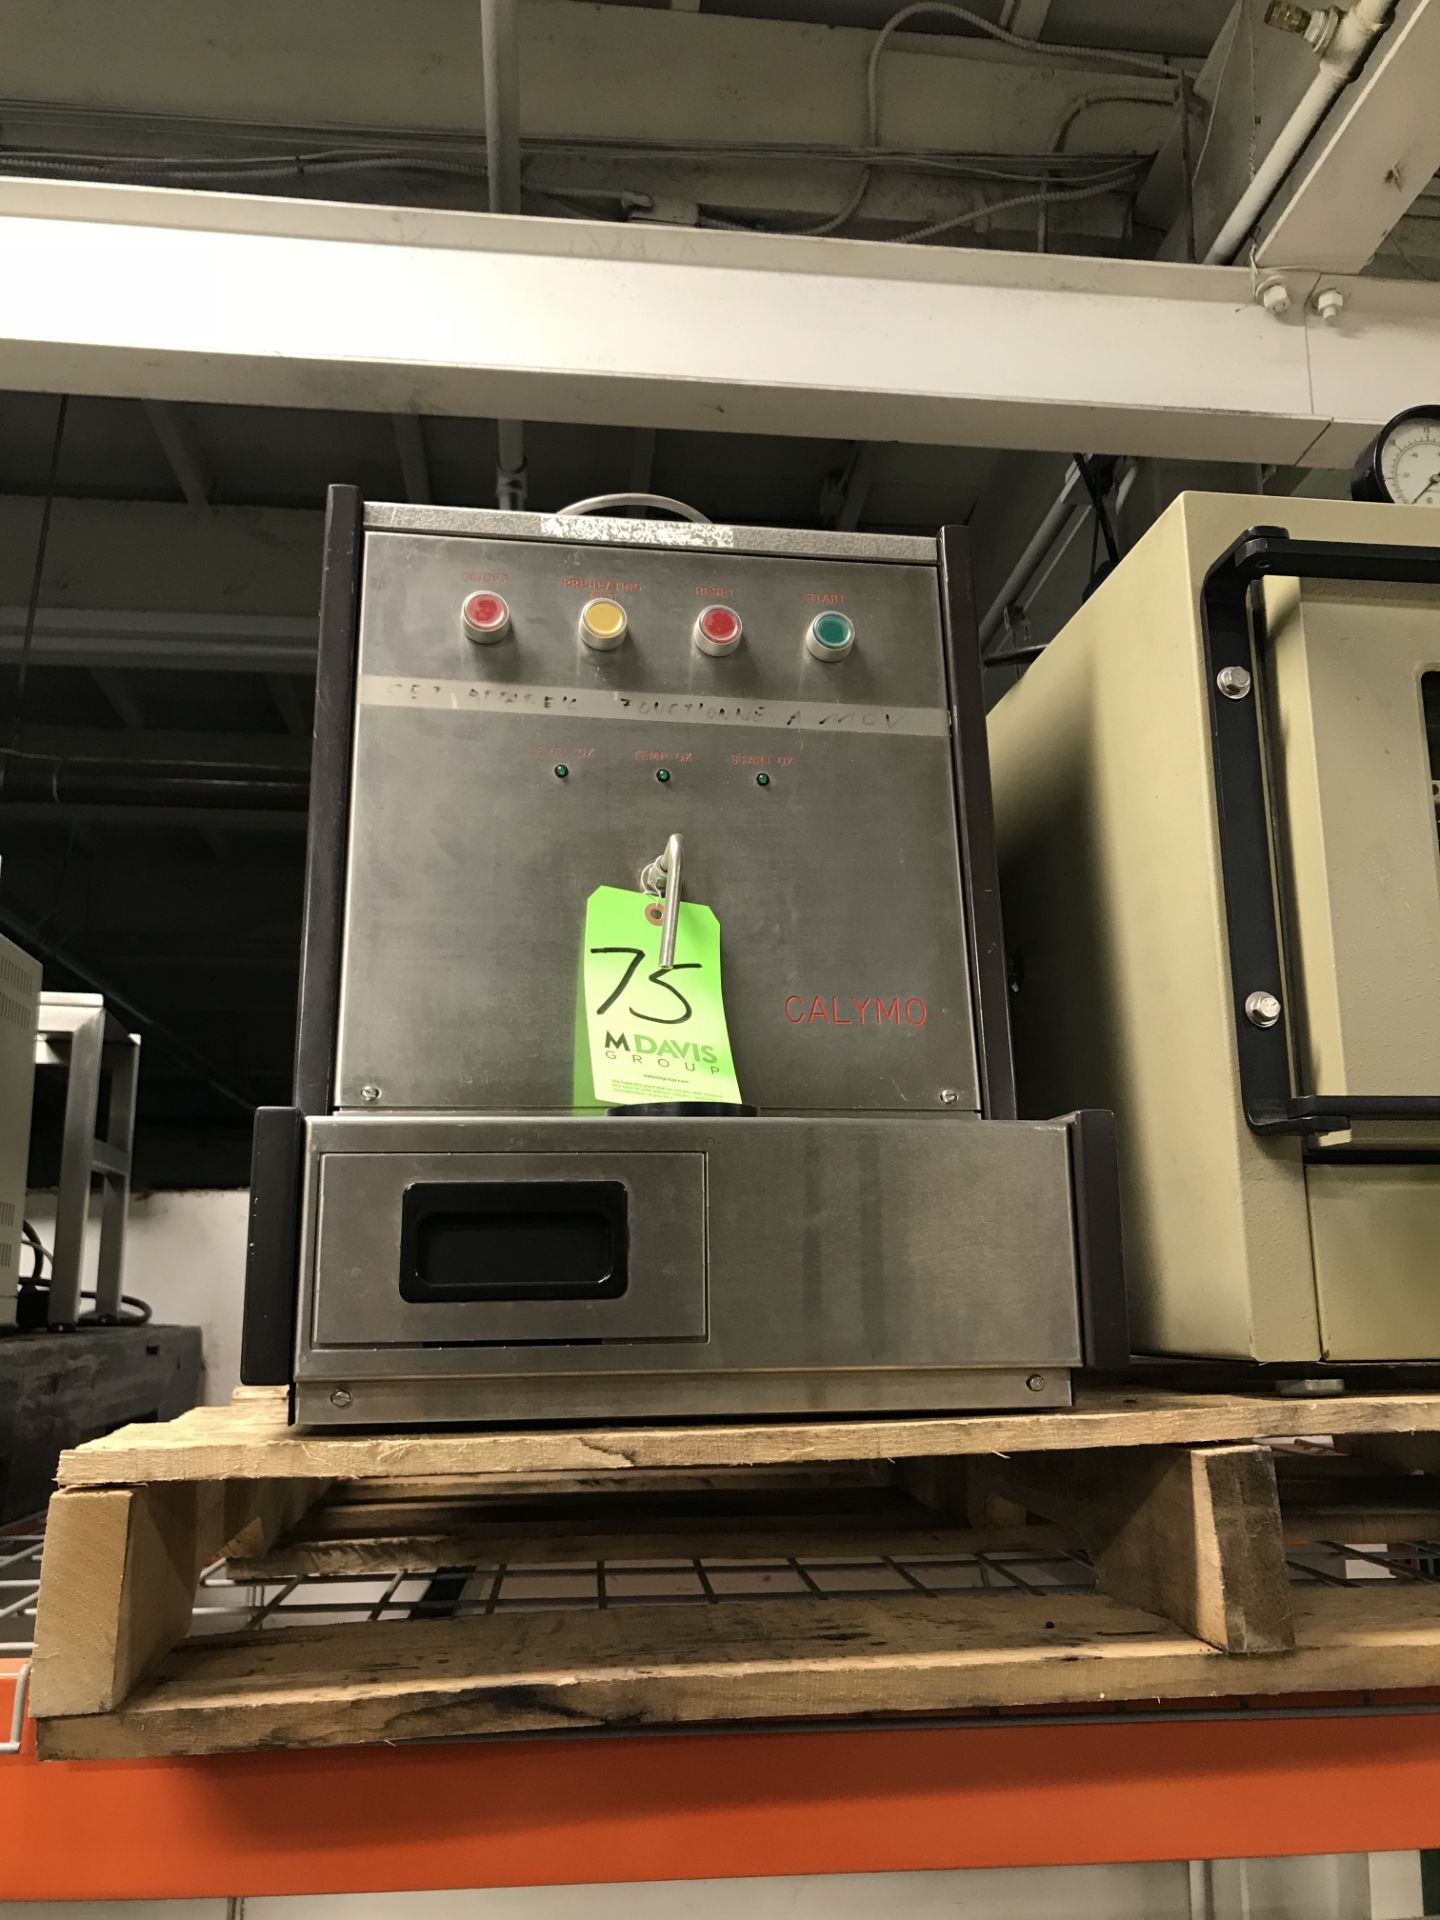 Calymo Nestec Electrotechnique Microwave Oven